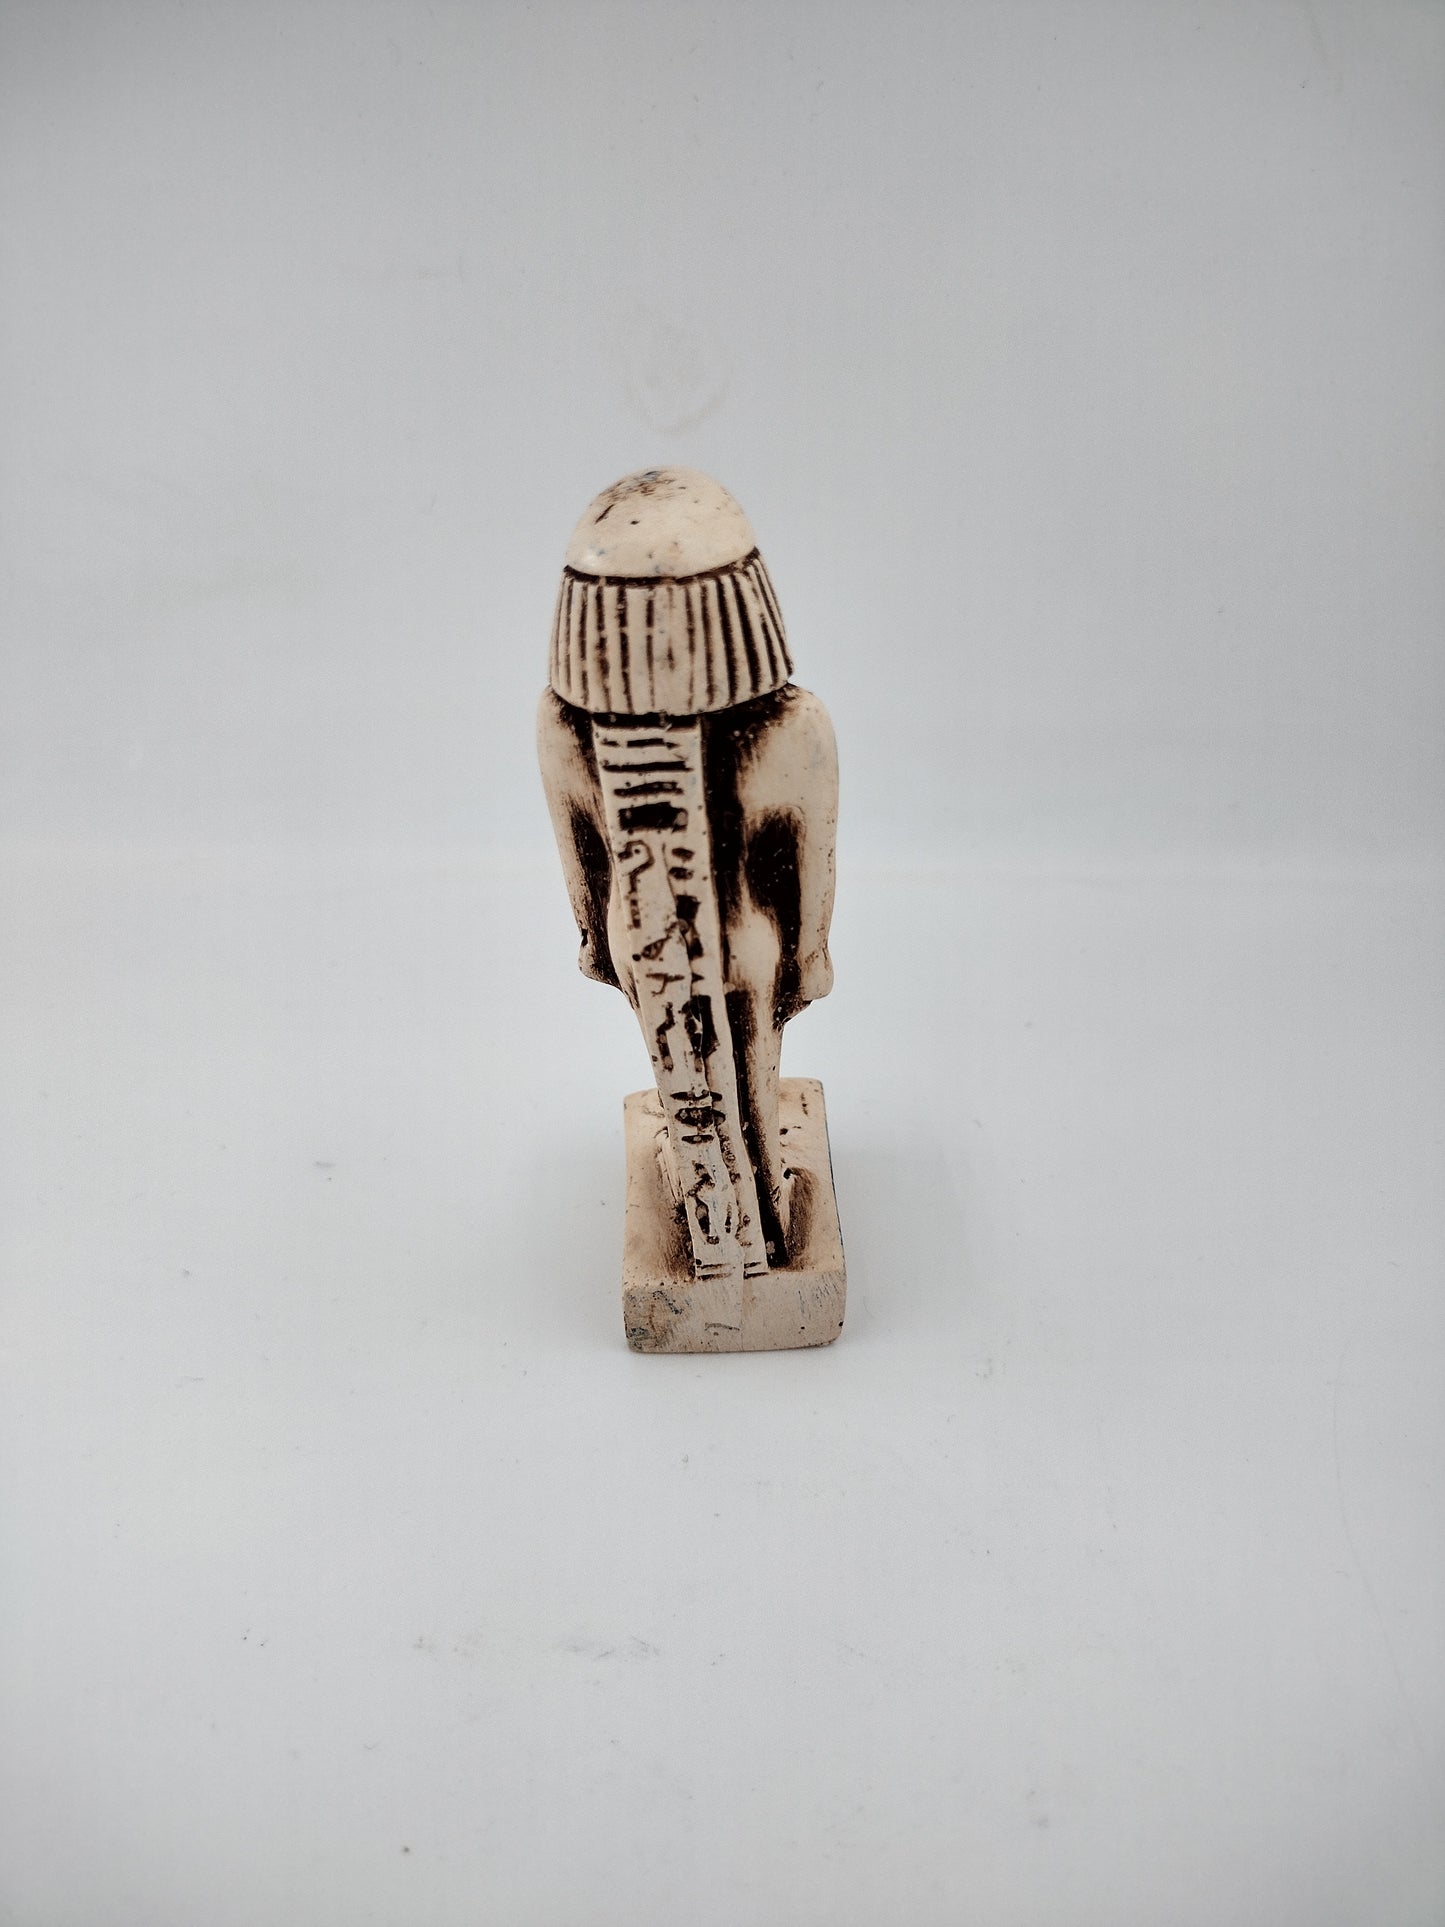 Egyptian Figurines